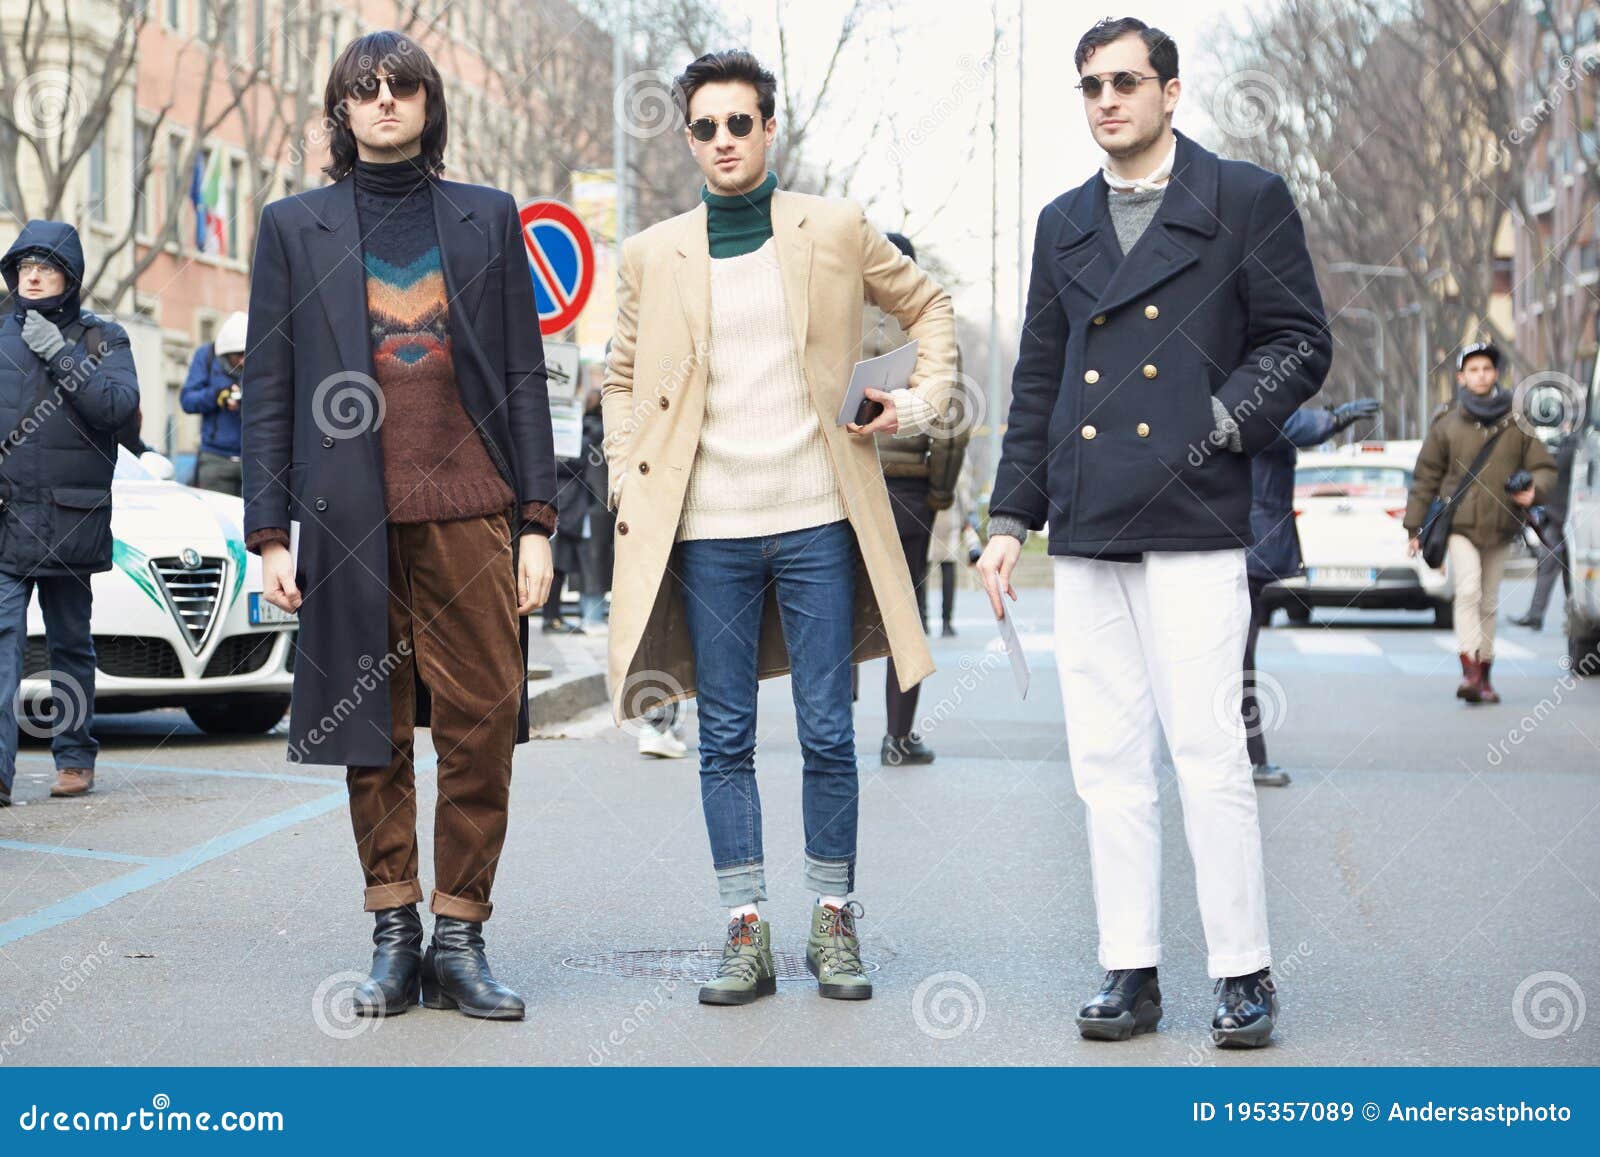 Three Stylish Men Poses for Photographers before Giorgio Armani Fashion Show  on January 19, 2015 in Milan, Editorial Stock Image - Image of accessory,  armani: 195357089